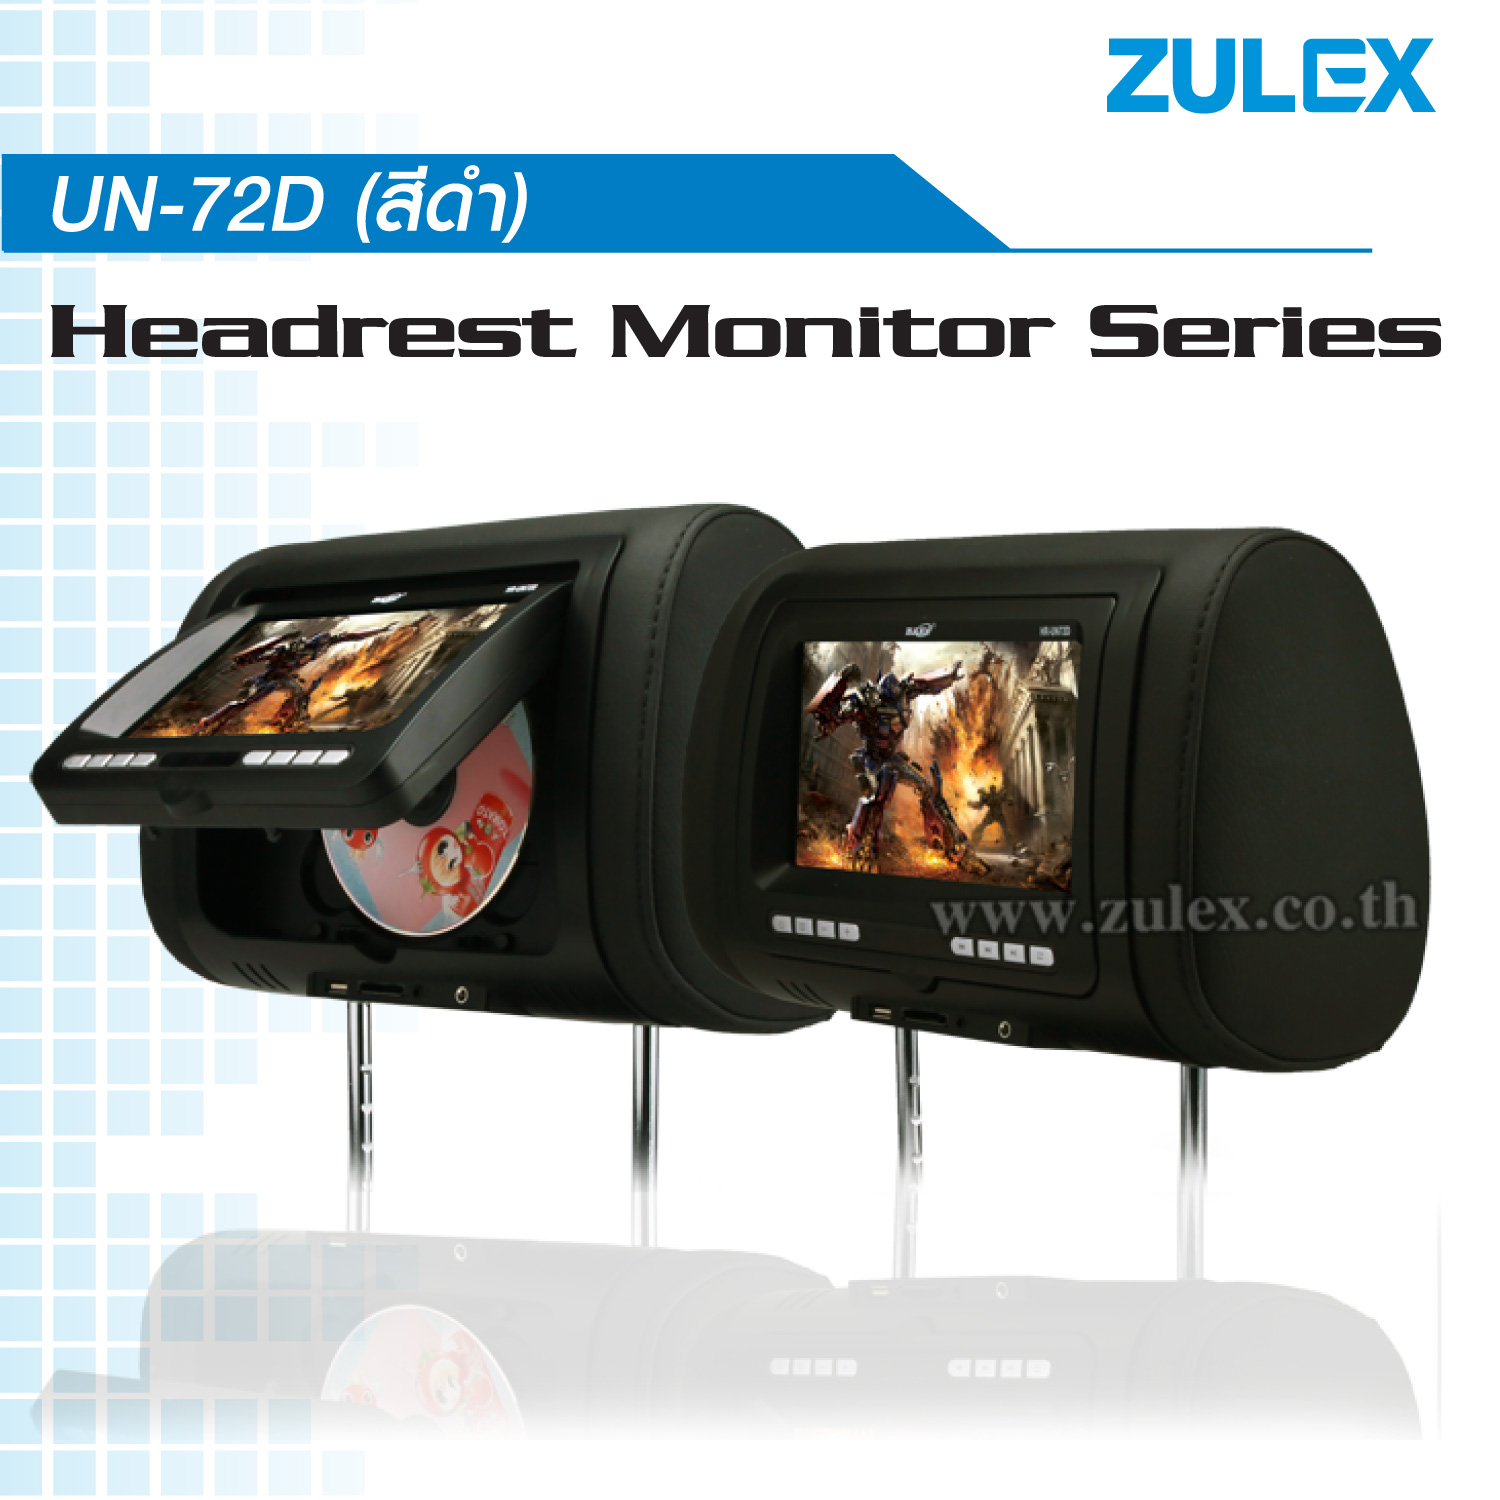 zulex จอฝังหมอนติดรถยนต์รุ่น HR-UN72D DVD, USB, SD Card  AUX IN, หูฟังF3.5จอภาพ digital  รองรับรถยนต์ได้ทุกรุ่นทุกยี่ห้อ